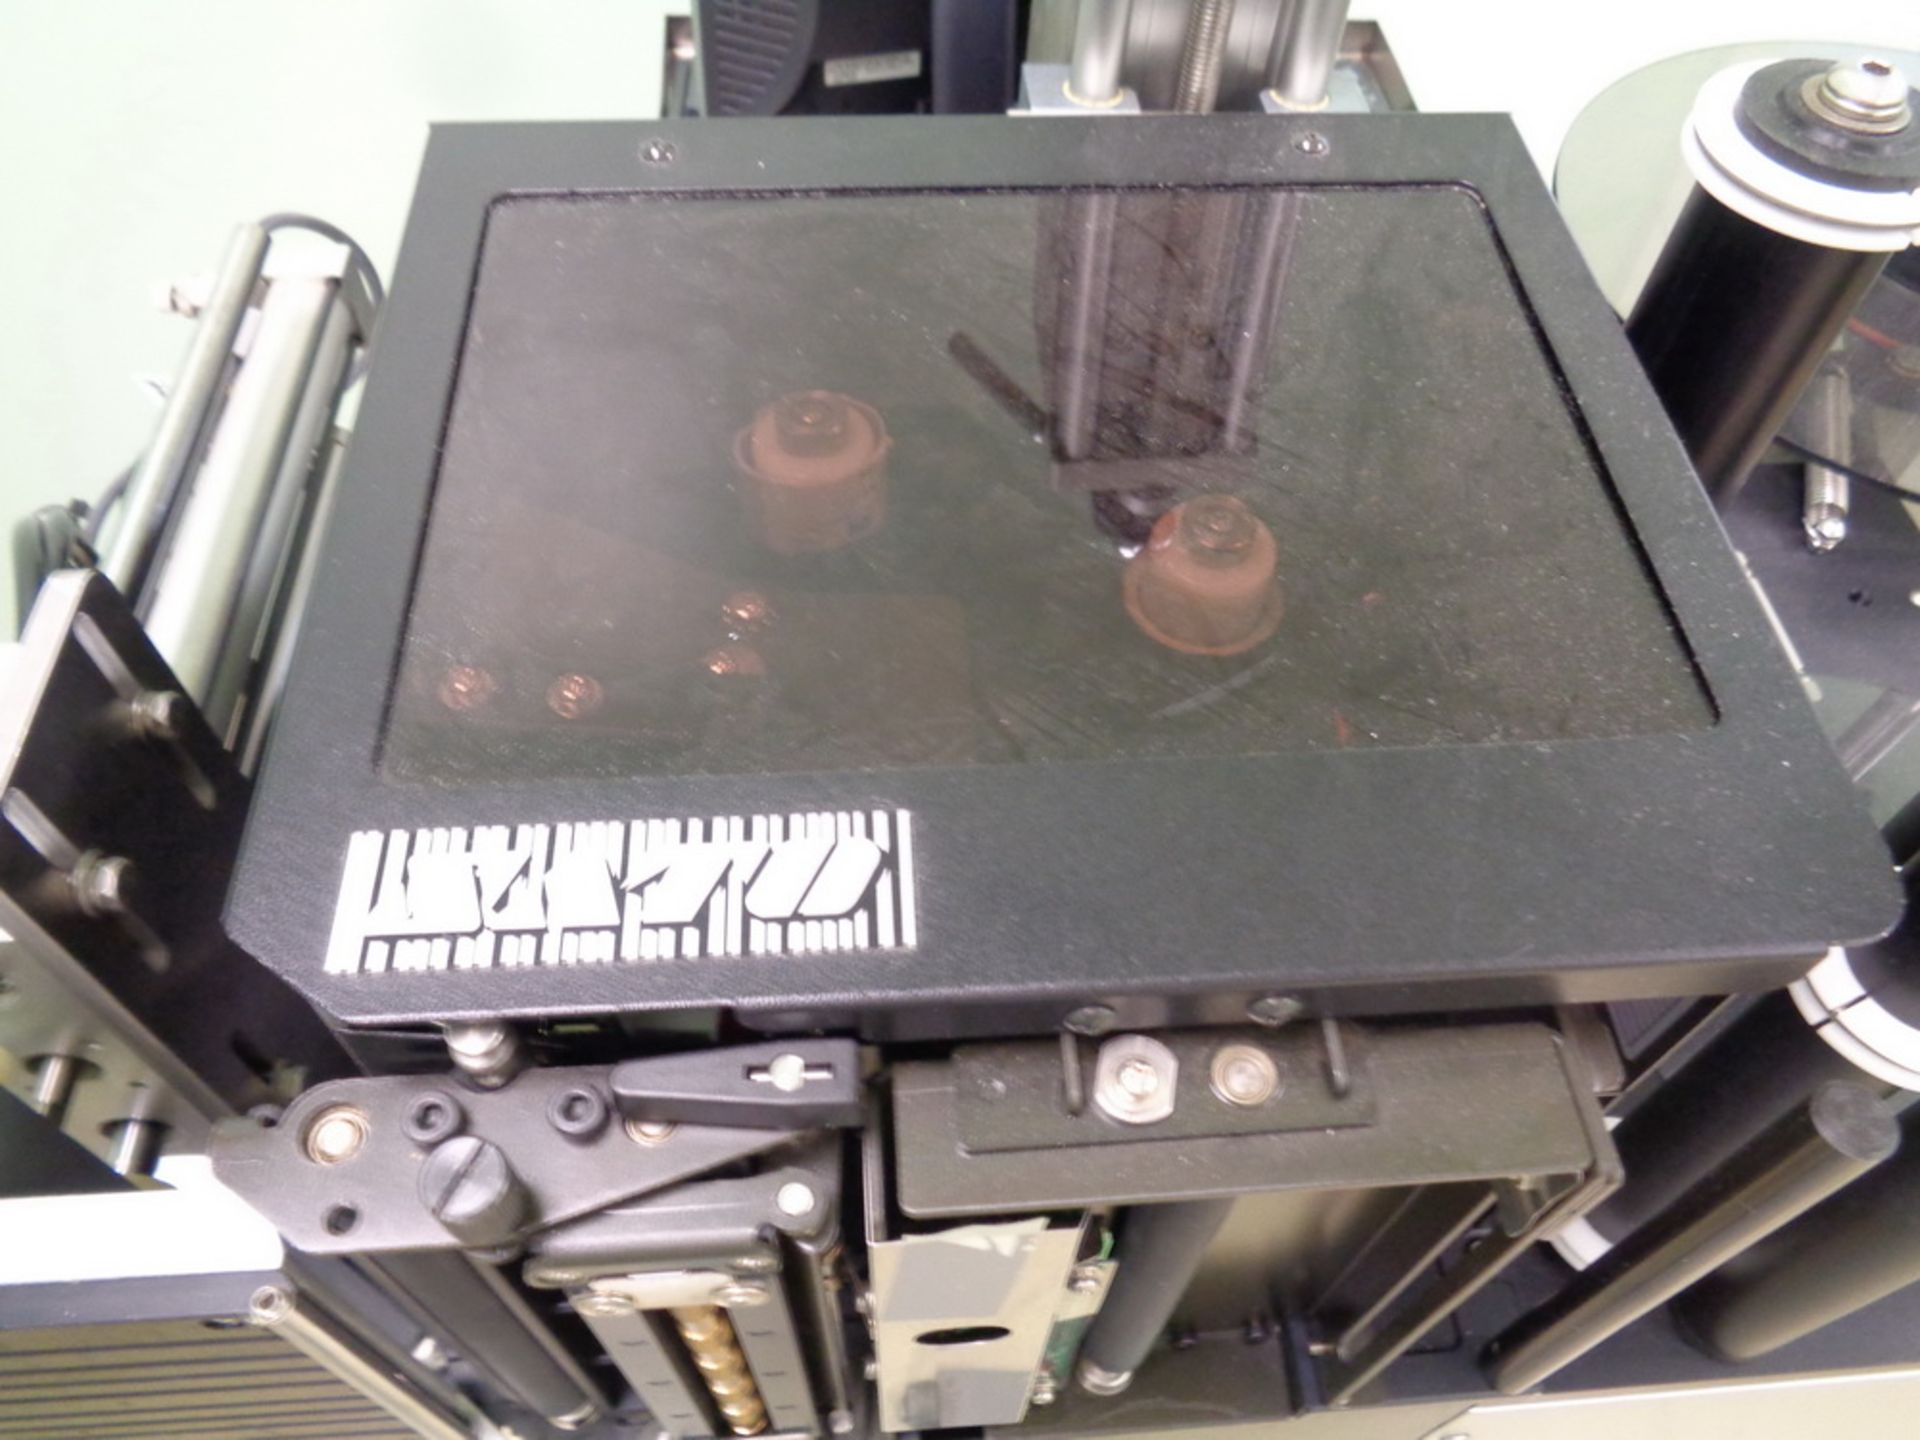 Quadrel Print and Apply Pressure Sensitive Carton Labeler, Model Q31-LS8490, S/N 57957-01 - Image 6 of 10